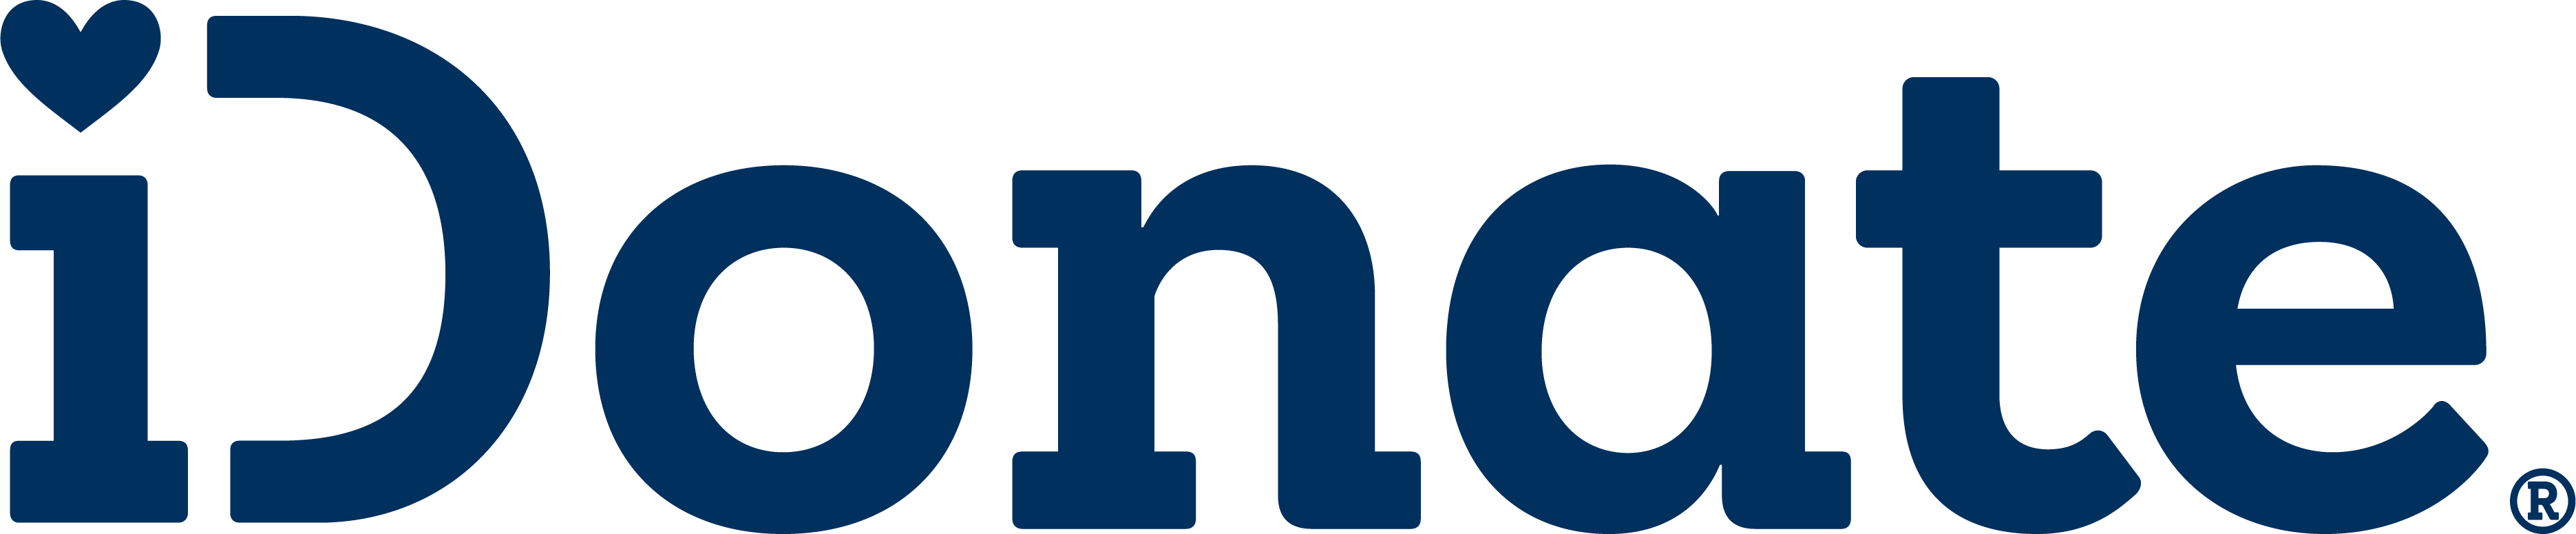 iDonate logo_solid navy blue-1